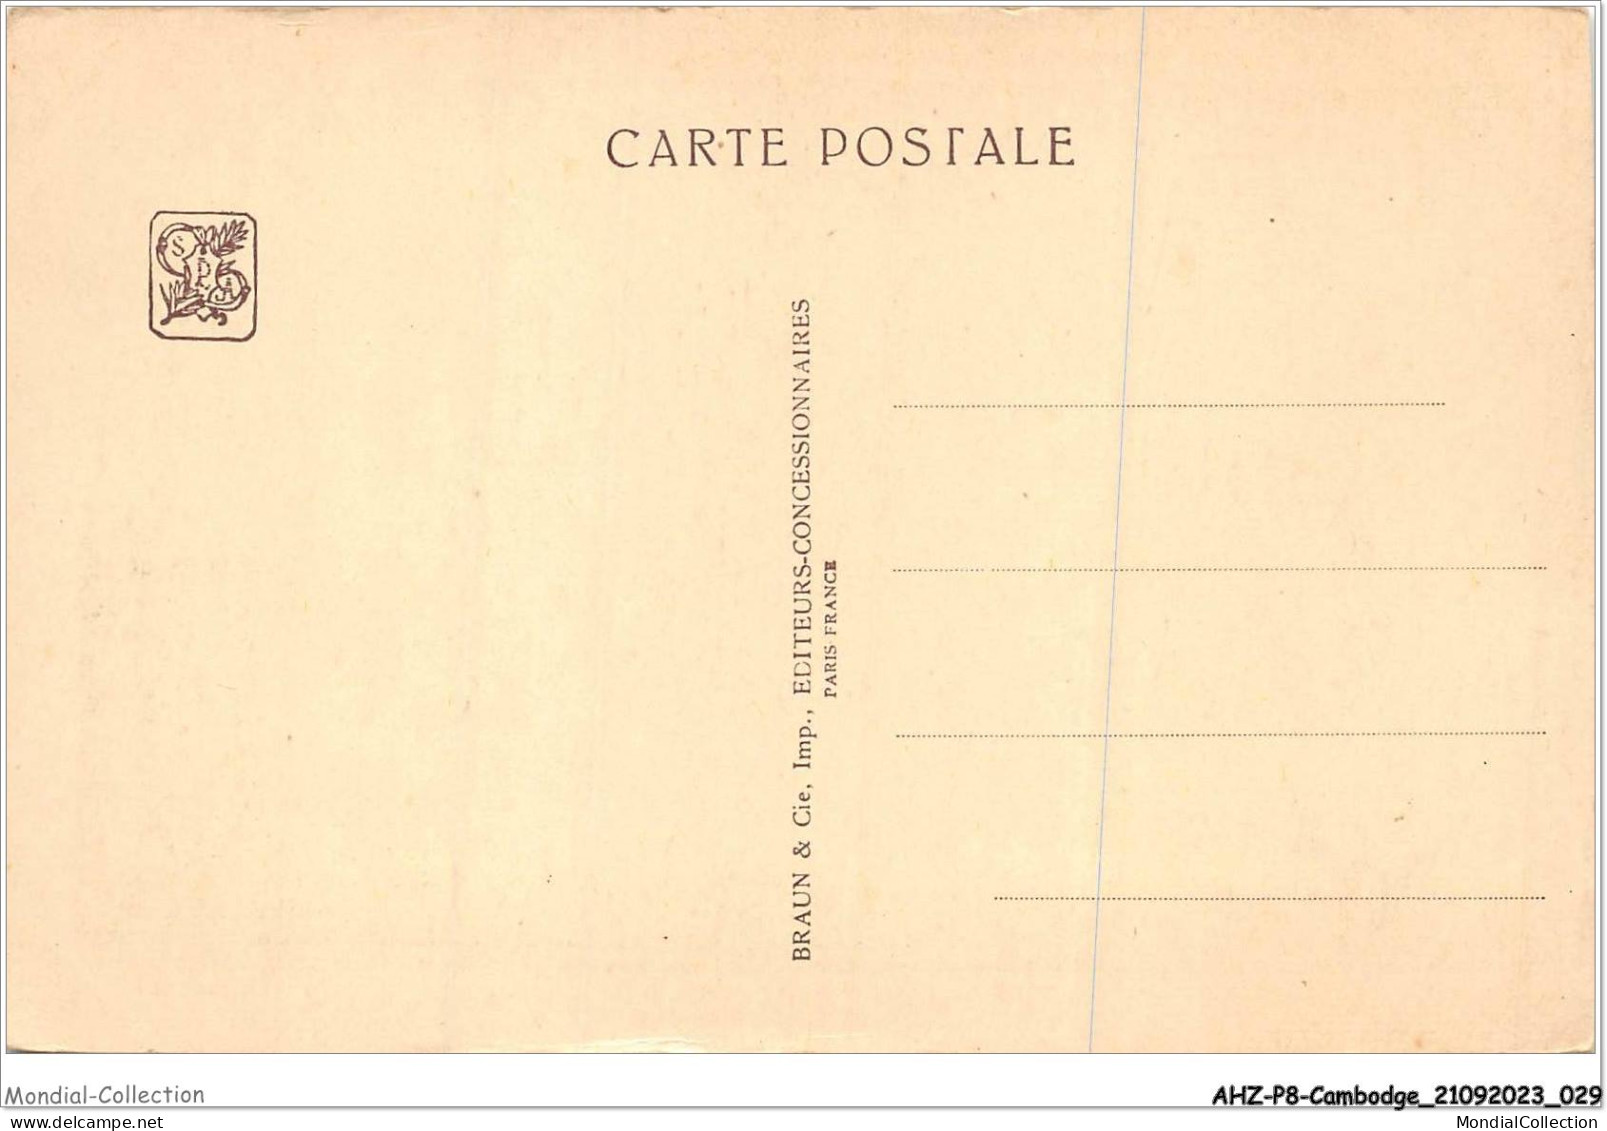 AHZP8-CAMBODGE-0697 - EXPOSITION COLONIALE INTERNATIONALE - PARIS 1931 - TEMPLE D'ANGKOR-VAT - Kambodscha